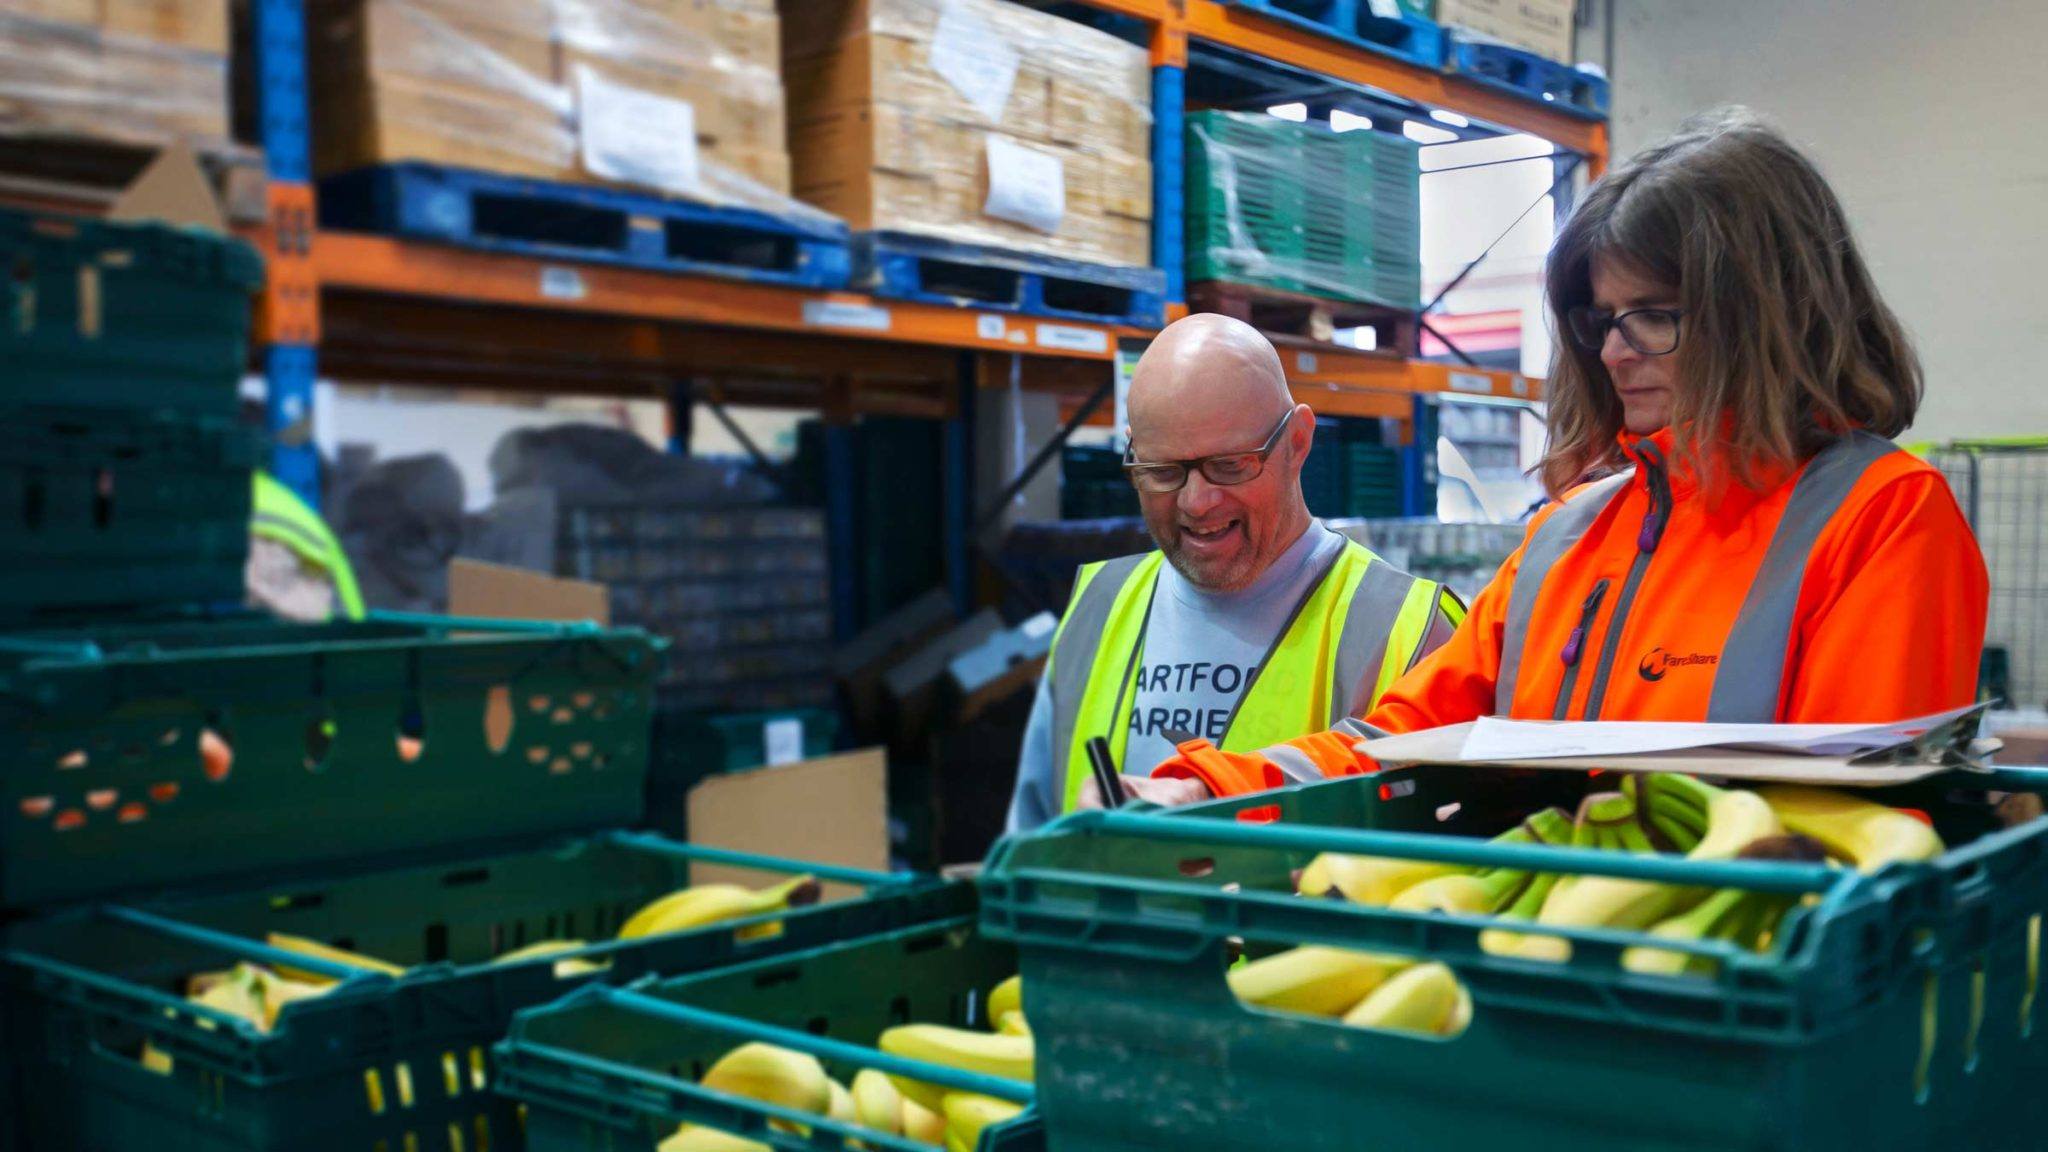 A team of volunteers packs food parcels in a warehouse.